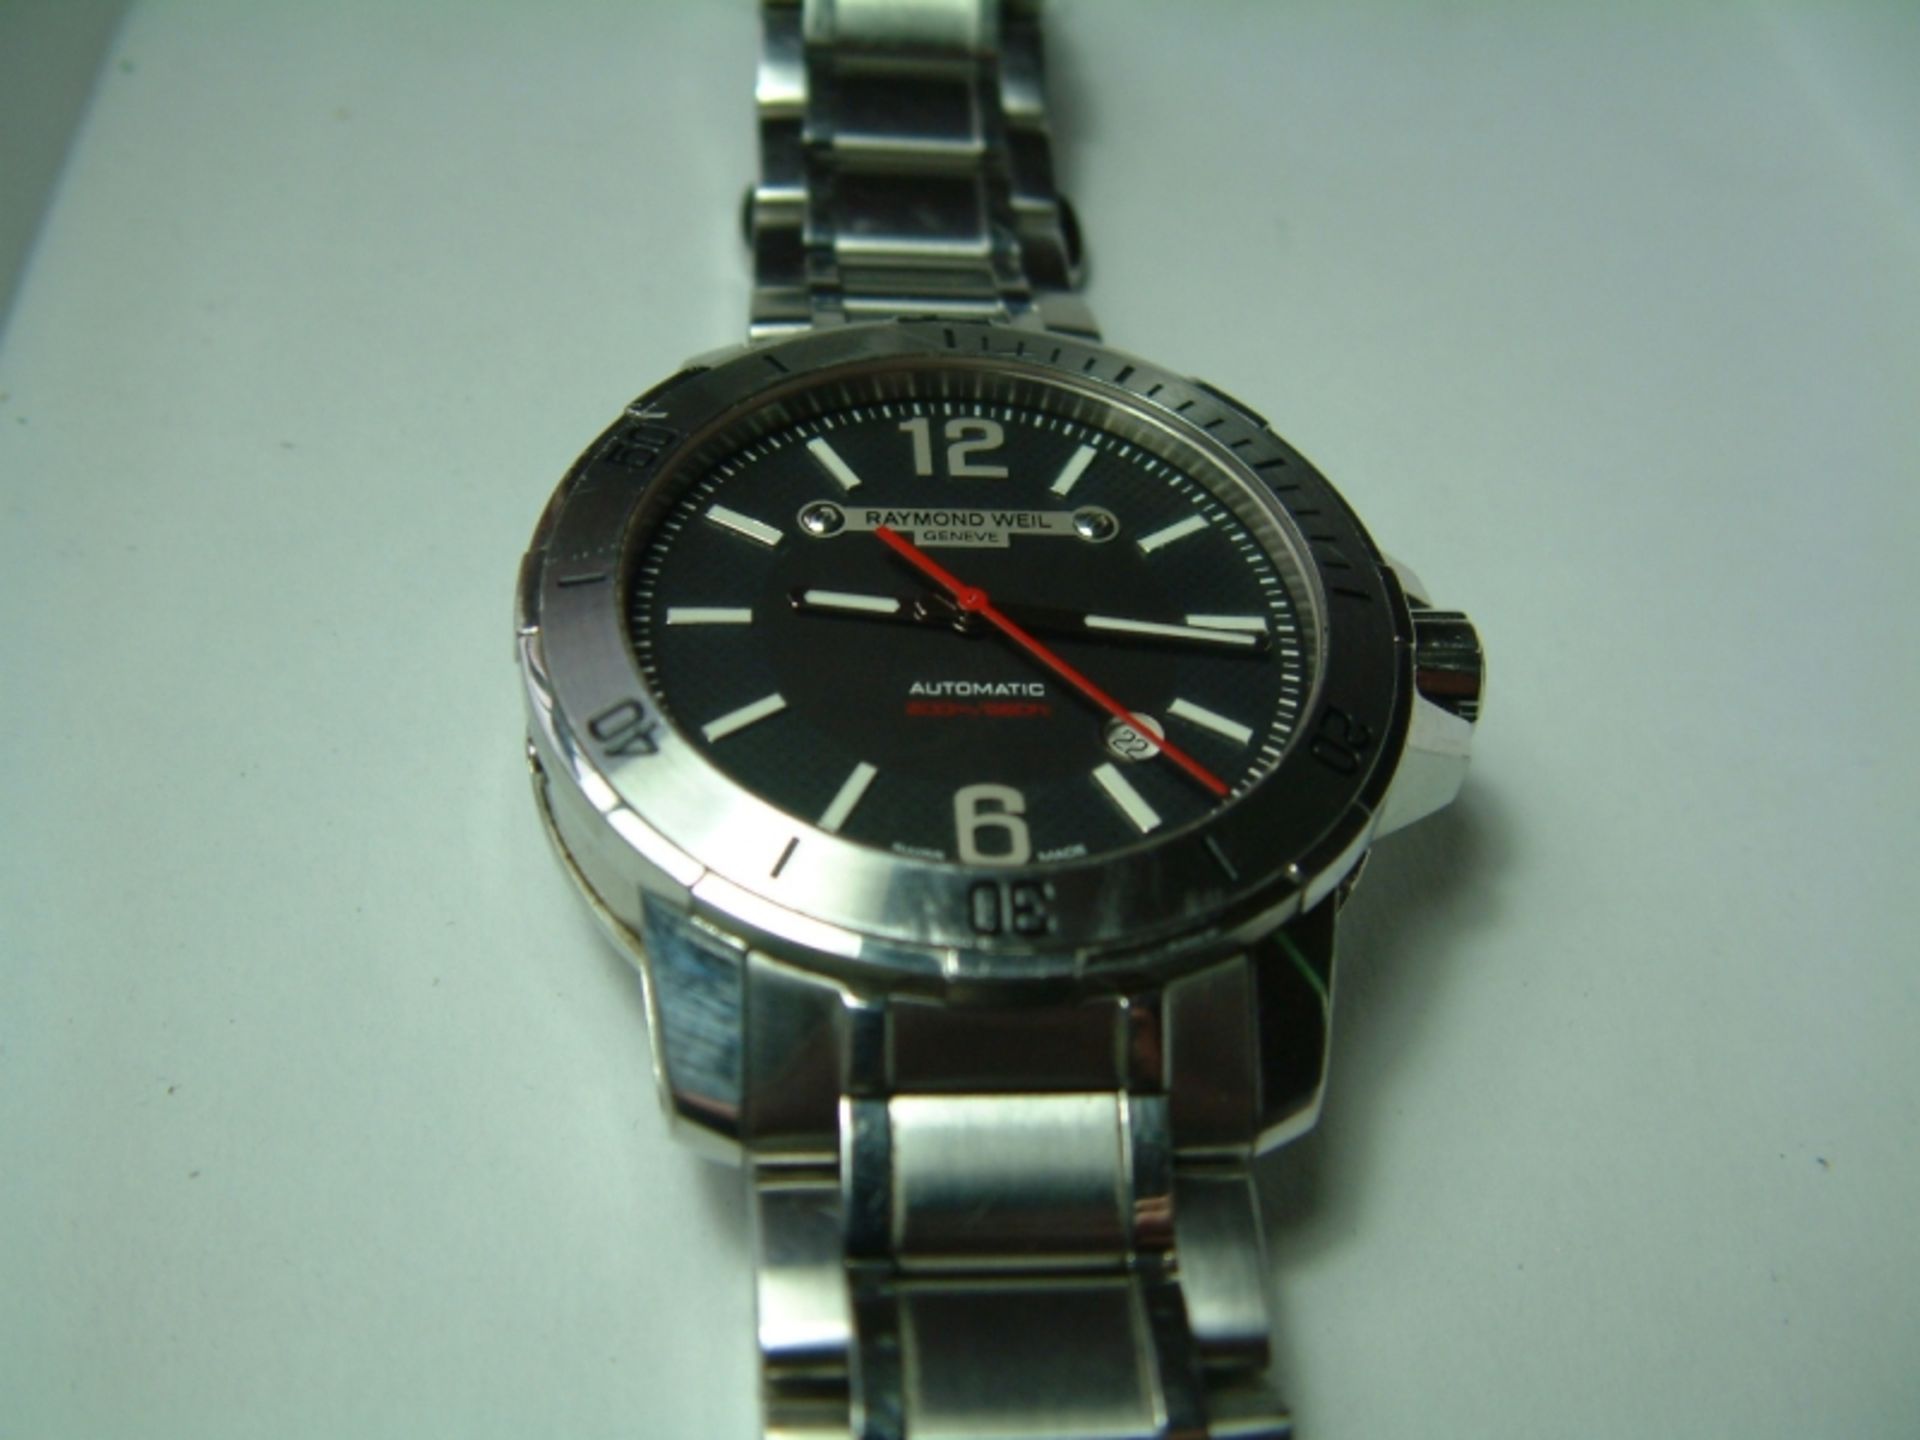 Stainless steel Raymond Weil Nabucco Automatic gentlemans Bracelet wristwatch - Image 3 of 3